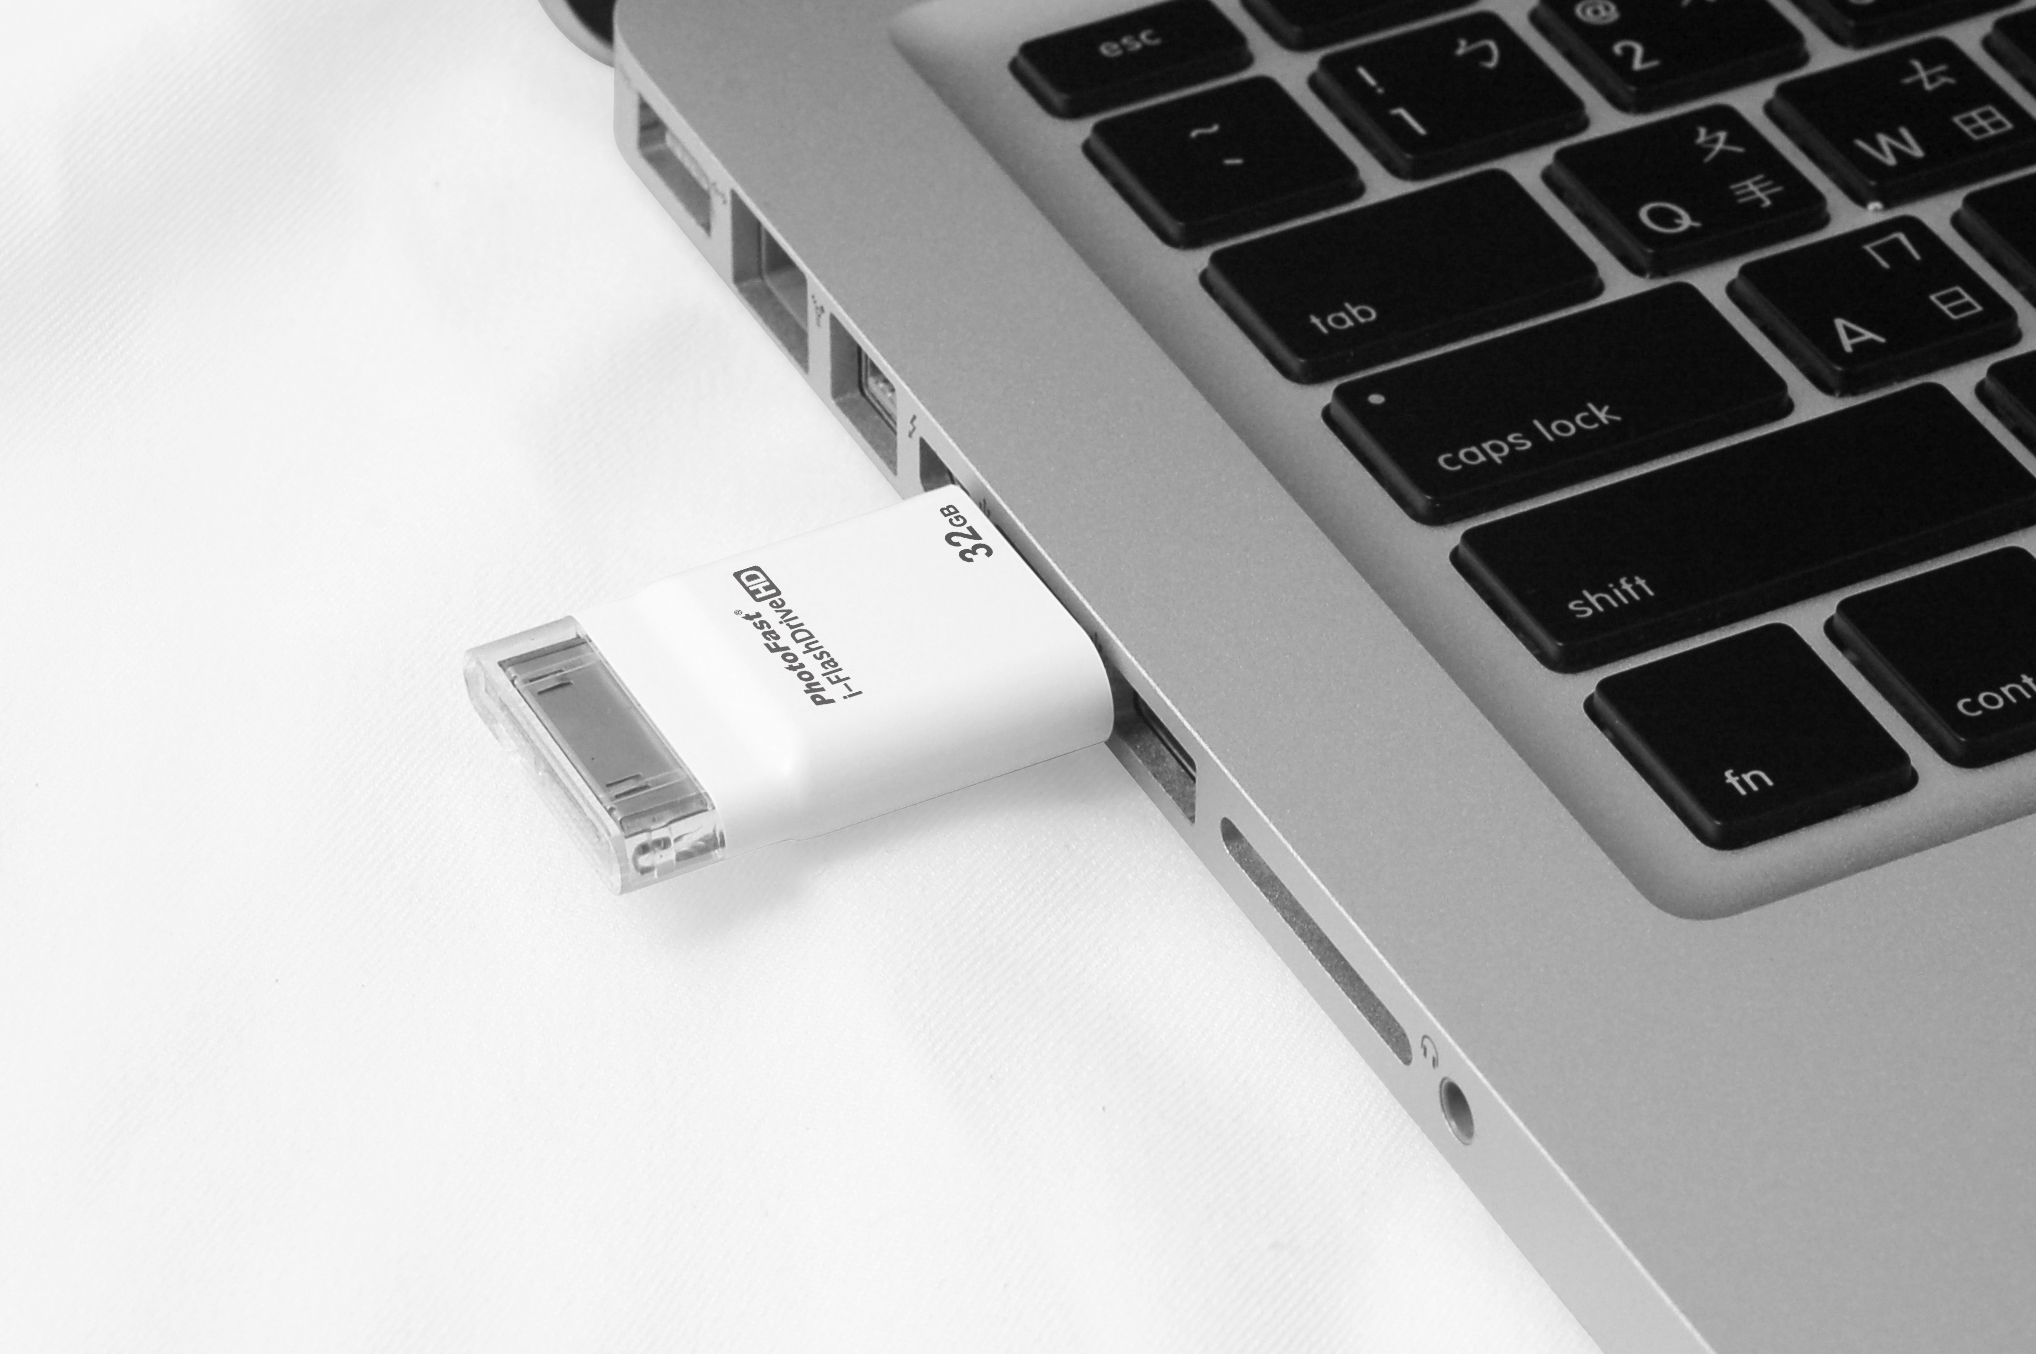 Игры на ноутбук на флешку. Флешка в ноутбуке. USB флешка и для ноутбука. Флешка для Mac. Загрузочная флешка для Мак мини.